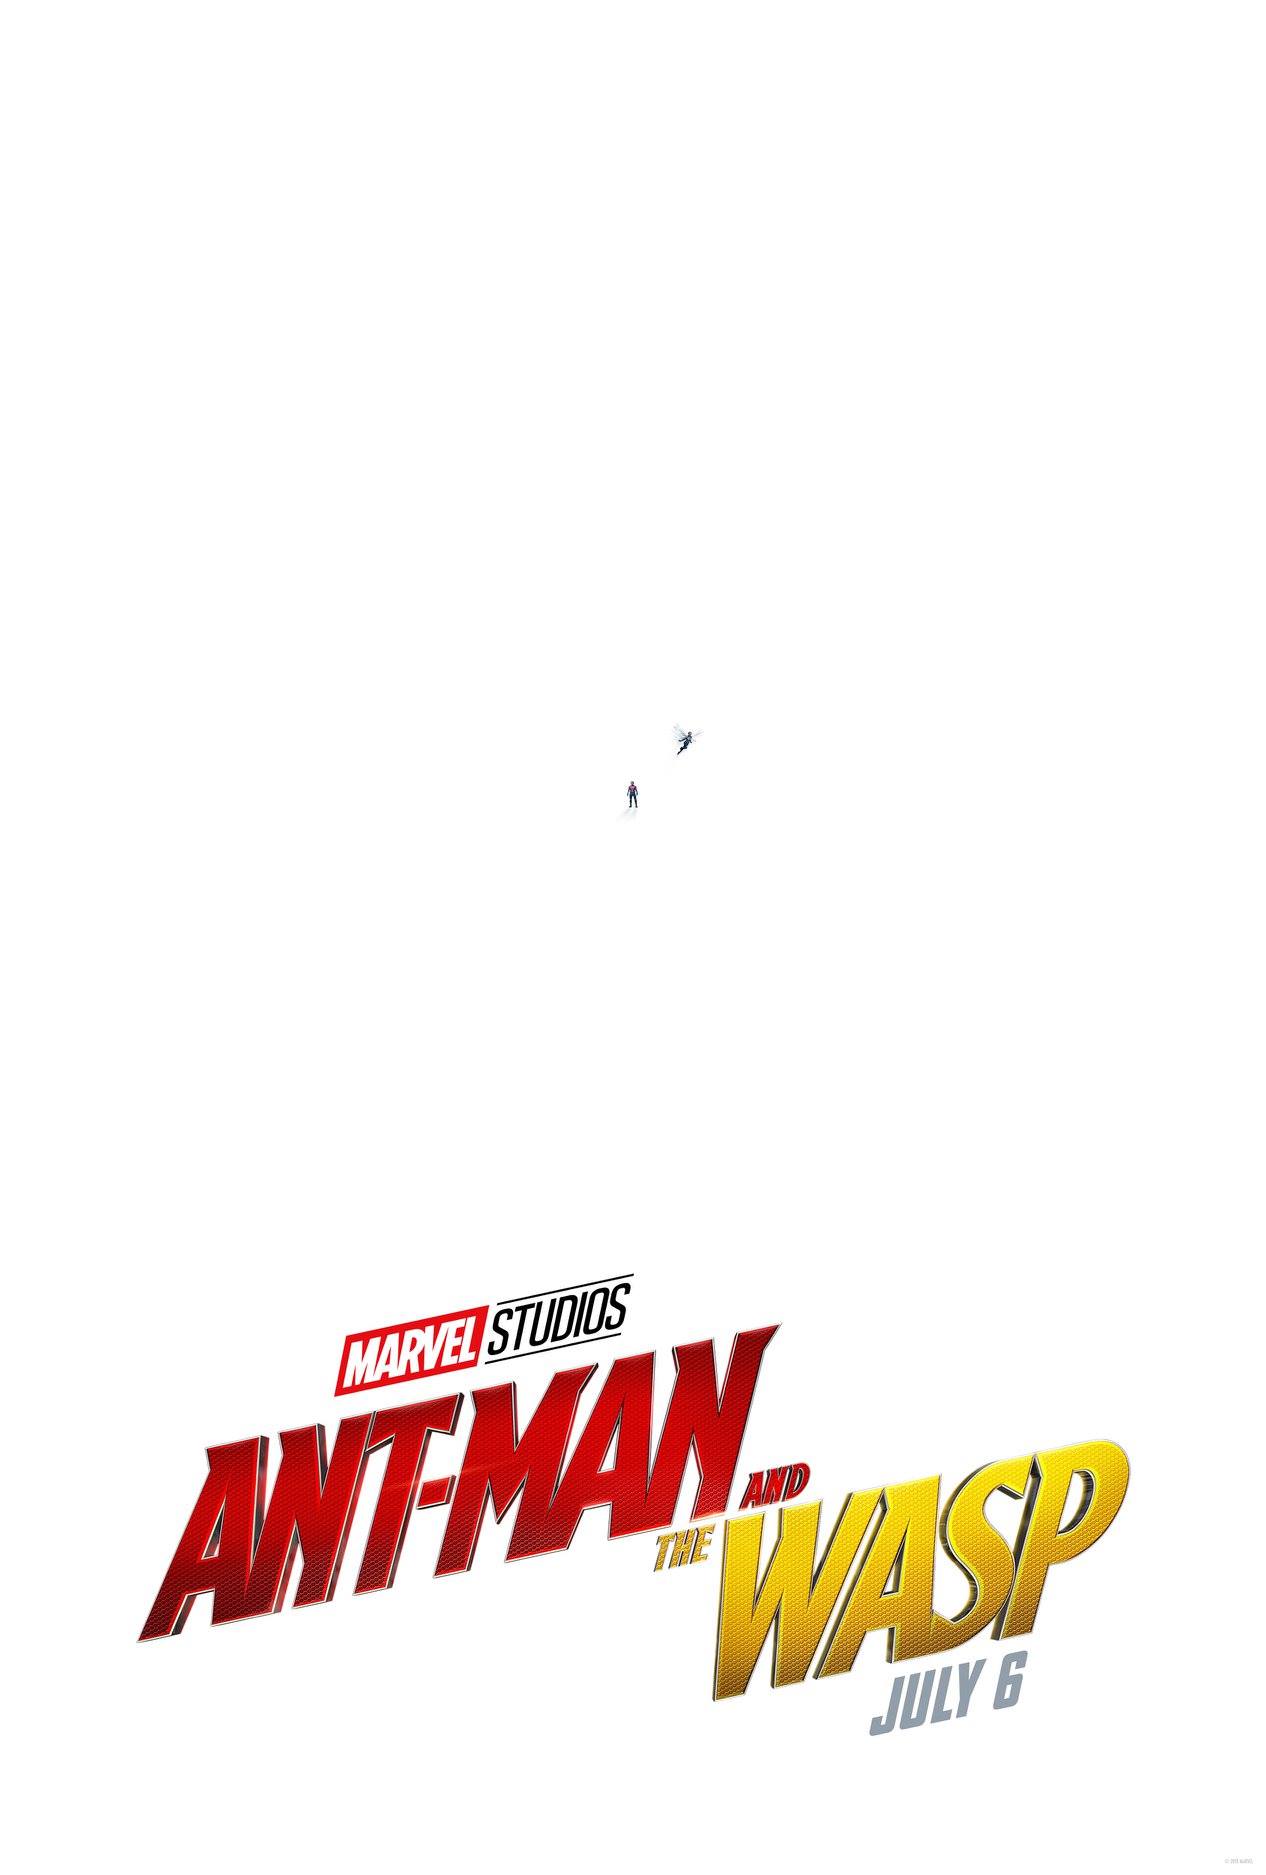 Prvý oficiálny plagát na 18. marvelovku Ant-Man and the Wasp